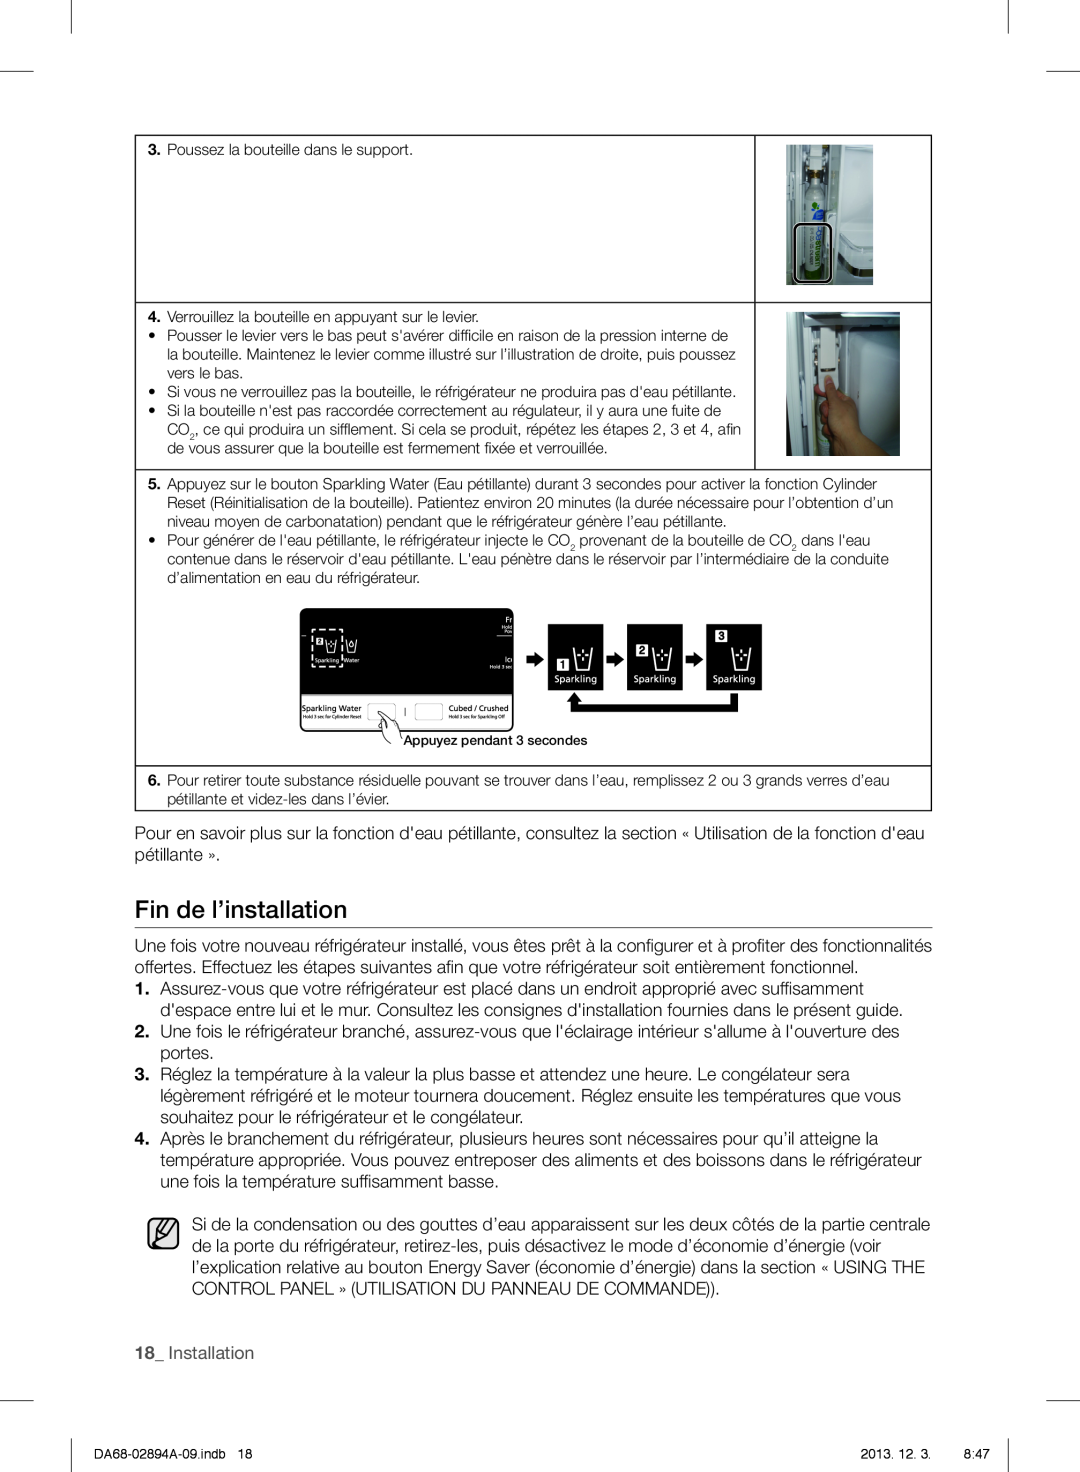 Samsung RF31FMEDBBC, RF31FMEDBSR, RF31FMESBSR user manual Fin de l’installation, Installation 